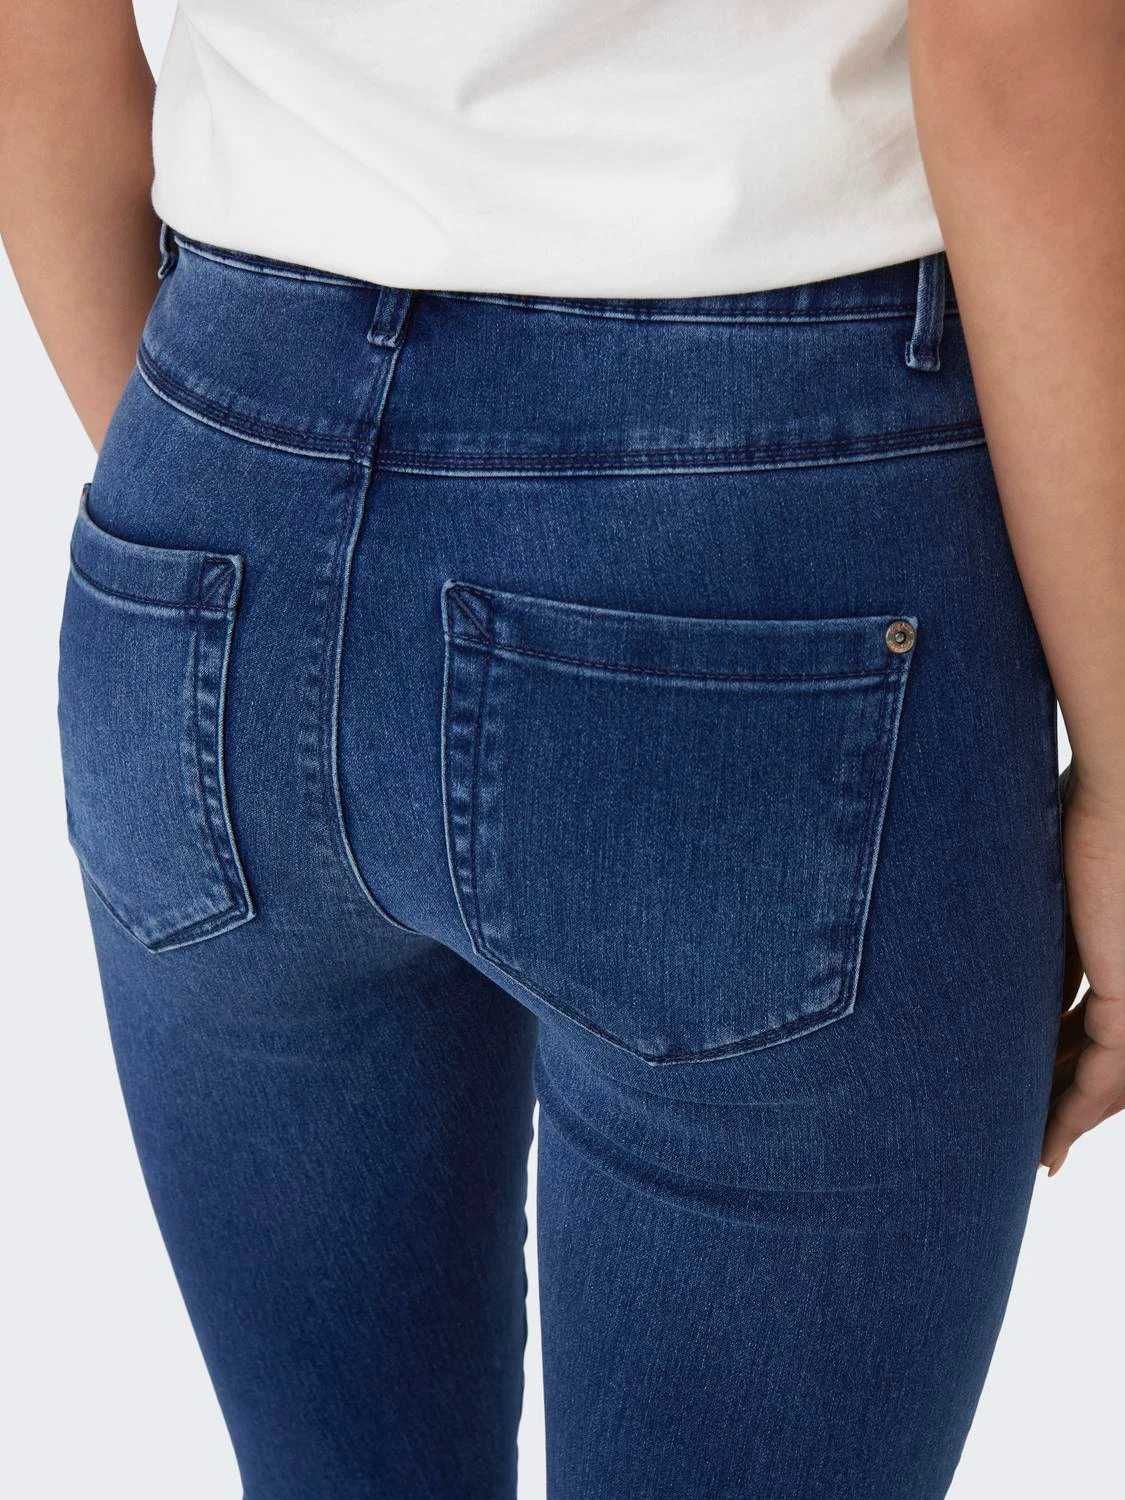 Spodnie jeansy damskie - ONLY - rozm S/36 Tall (MB356)